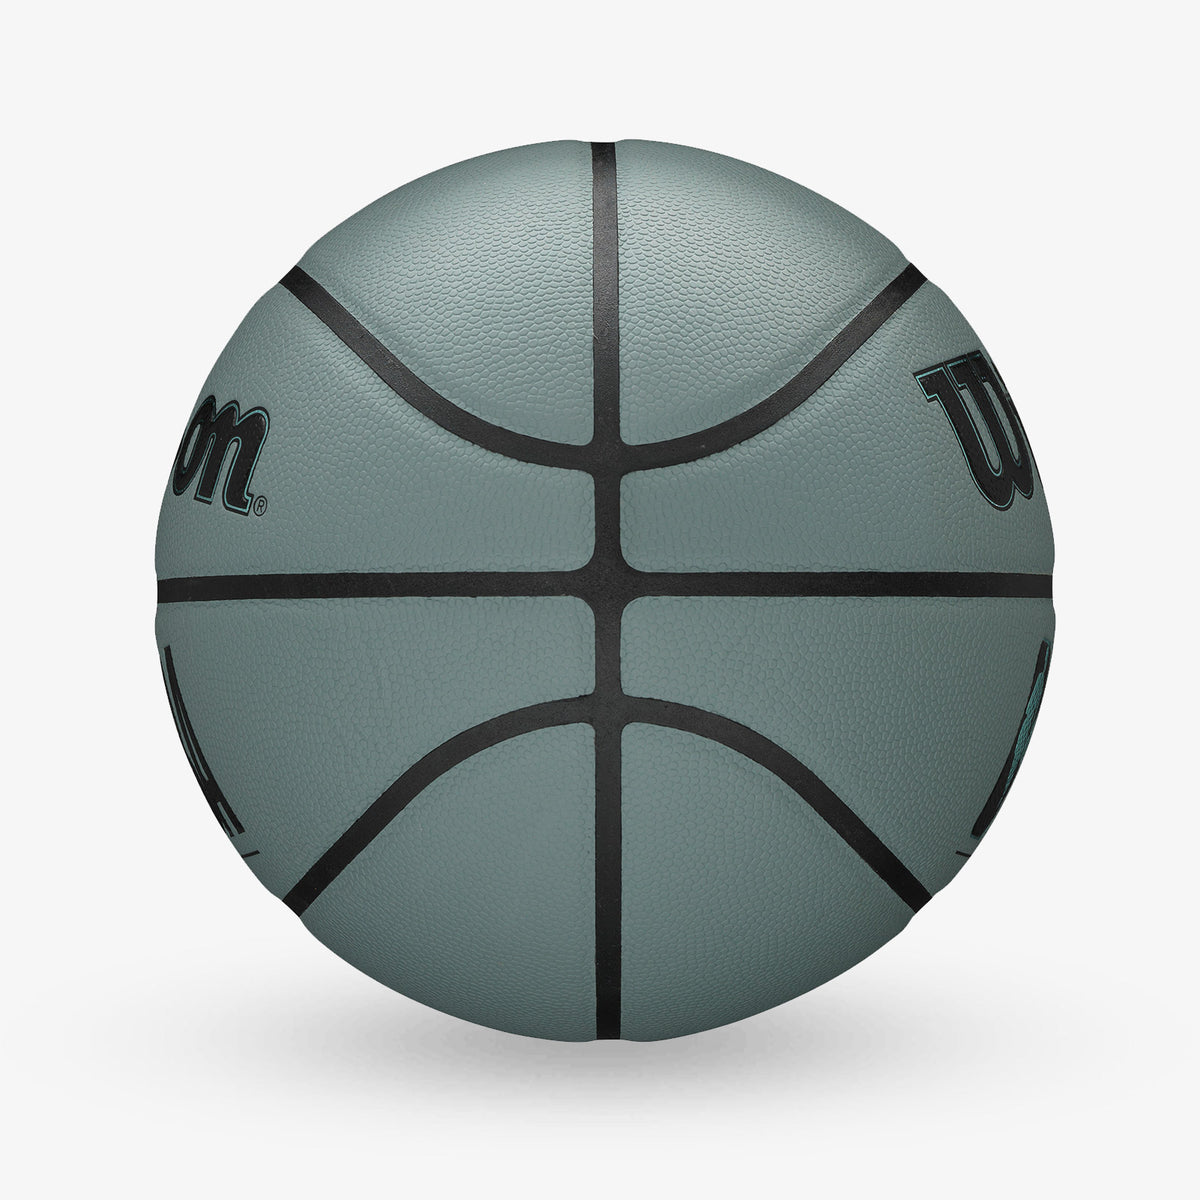 NBA Forge Basketball - Light Grey - Size 7